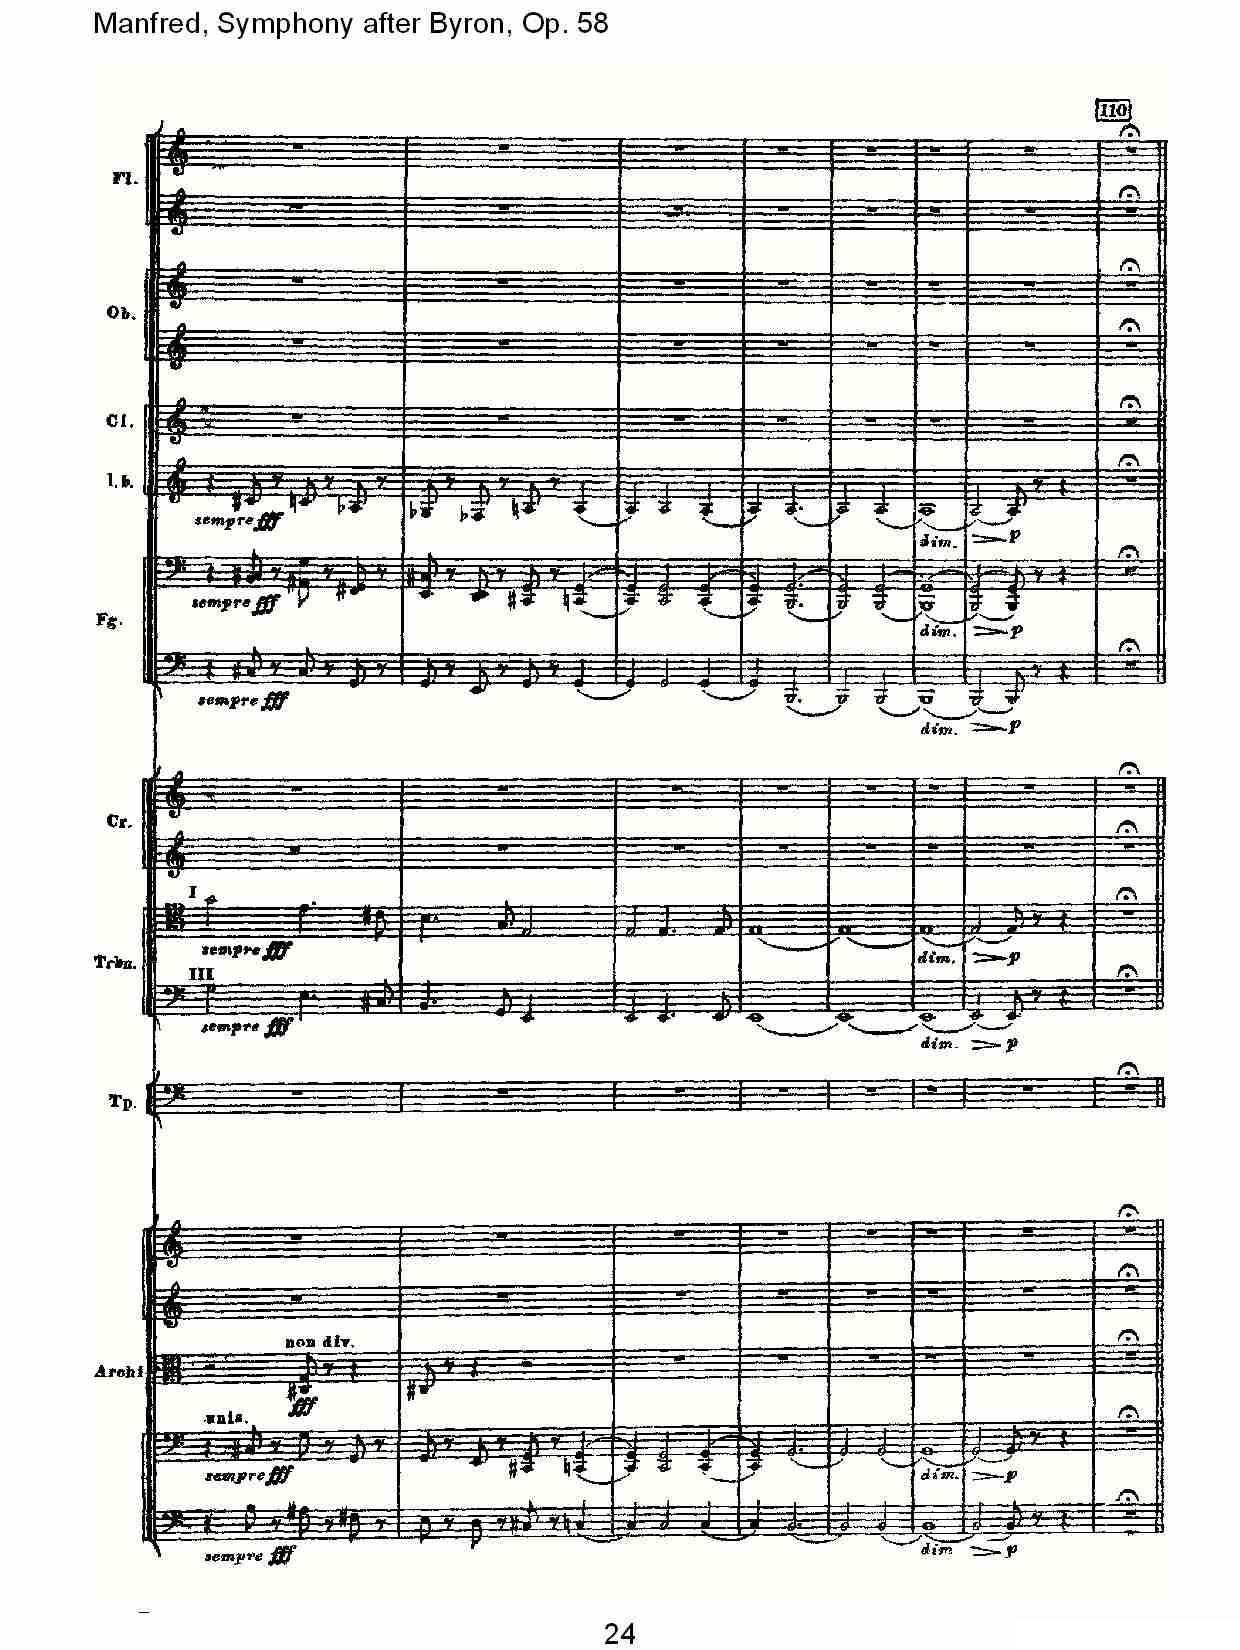 Manfred, Symphony after Byron, Op.58第一乐章（一）其它曲谱（图24）